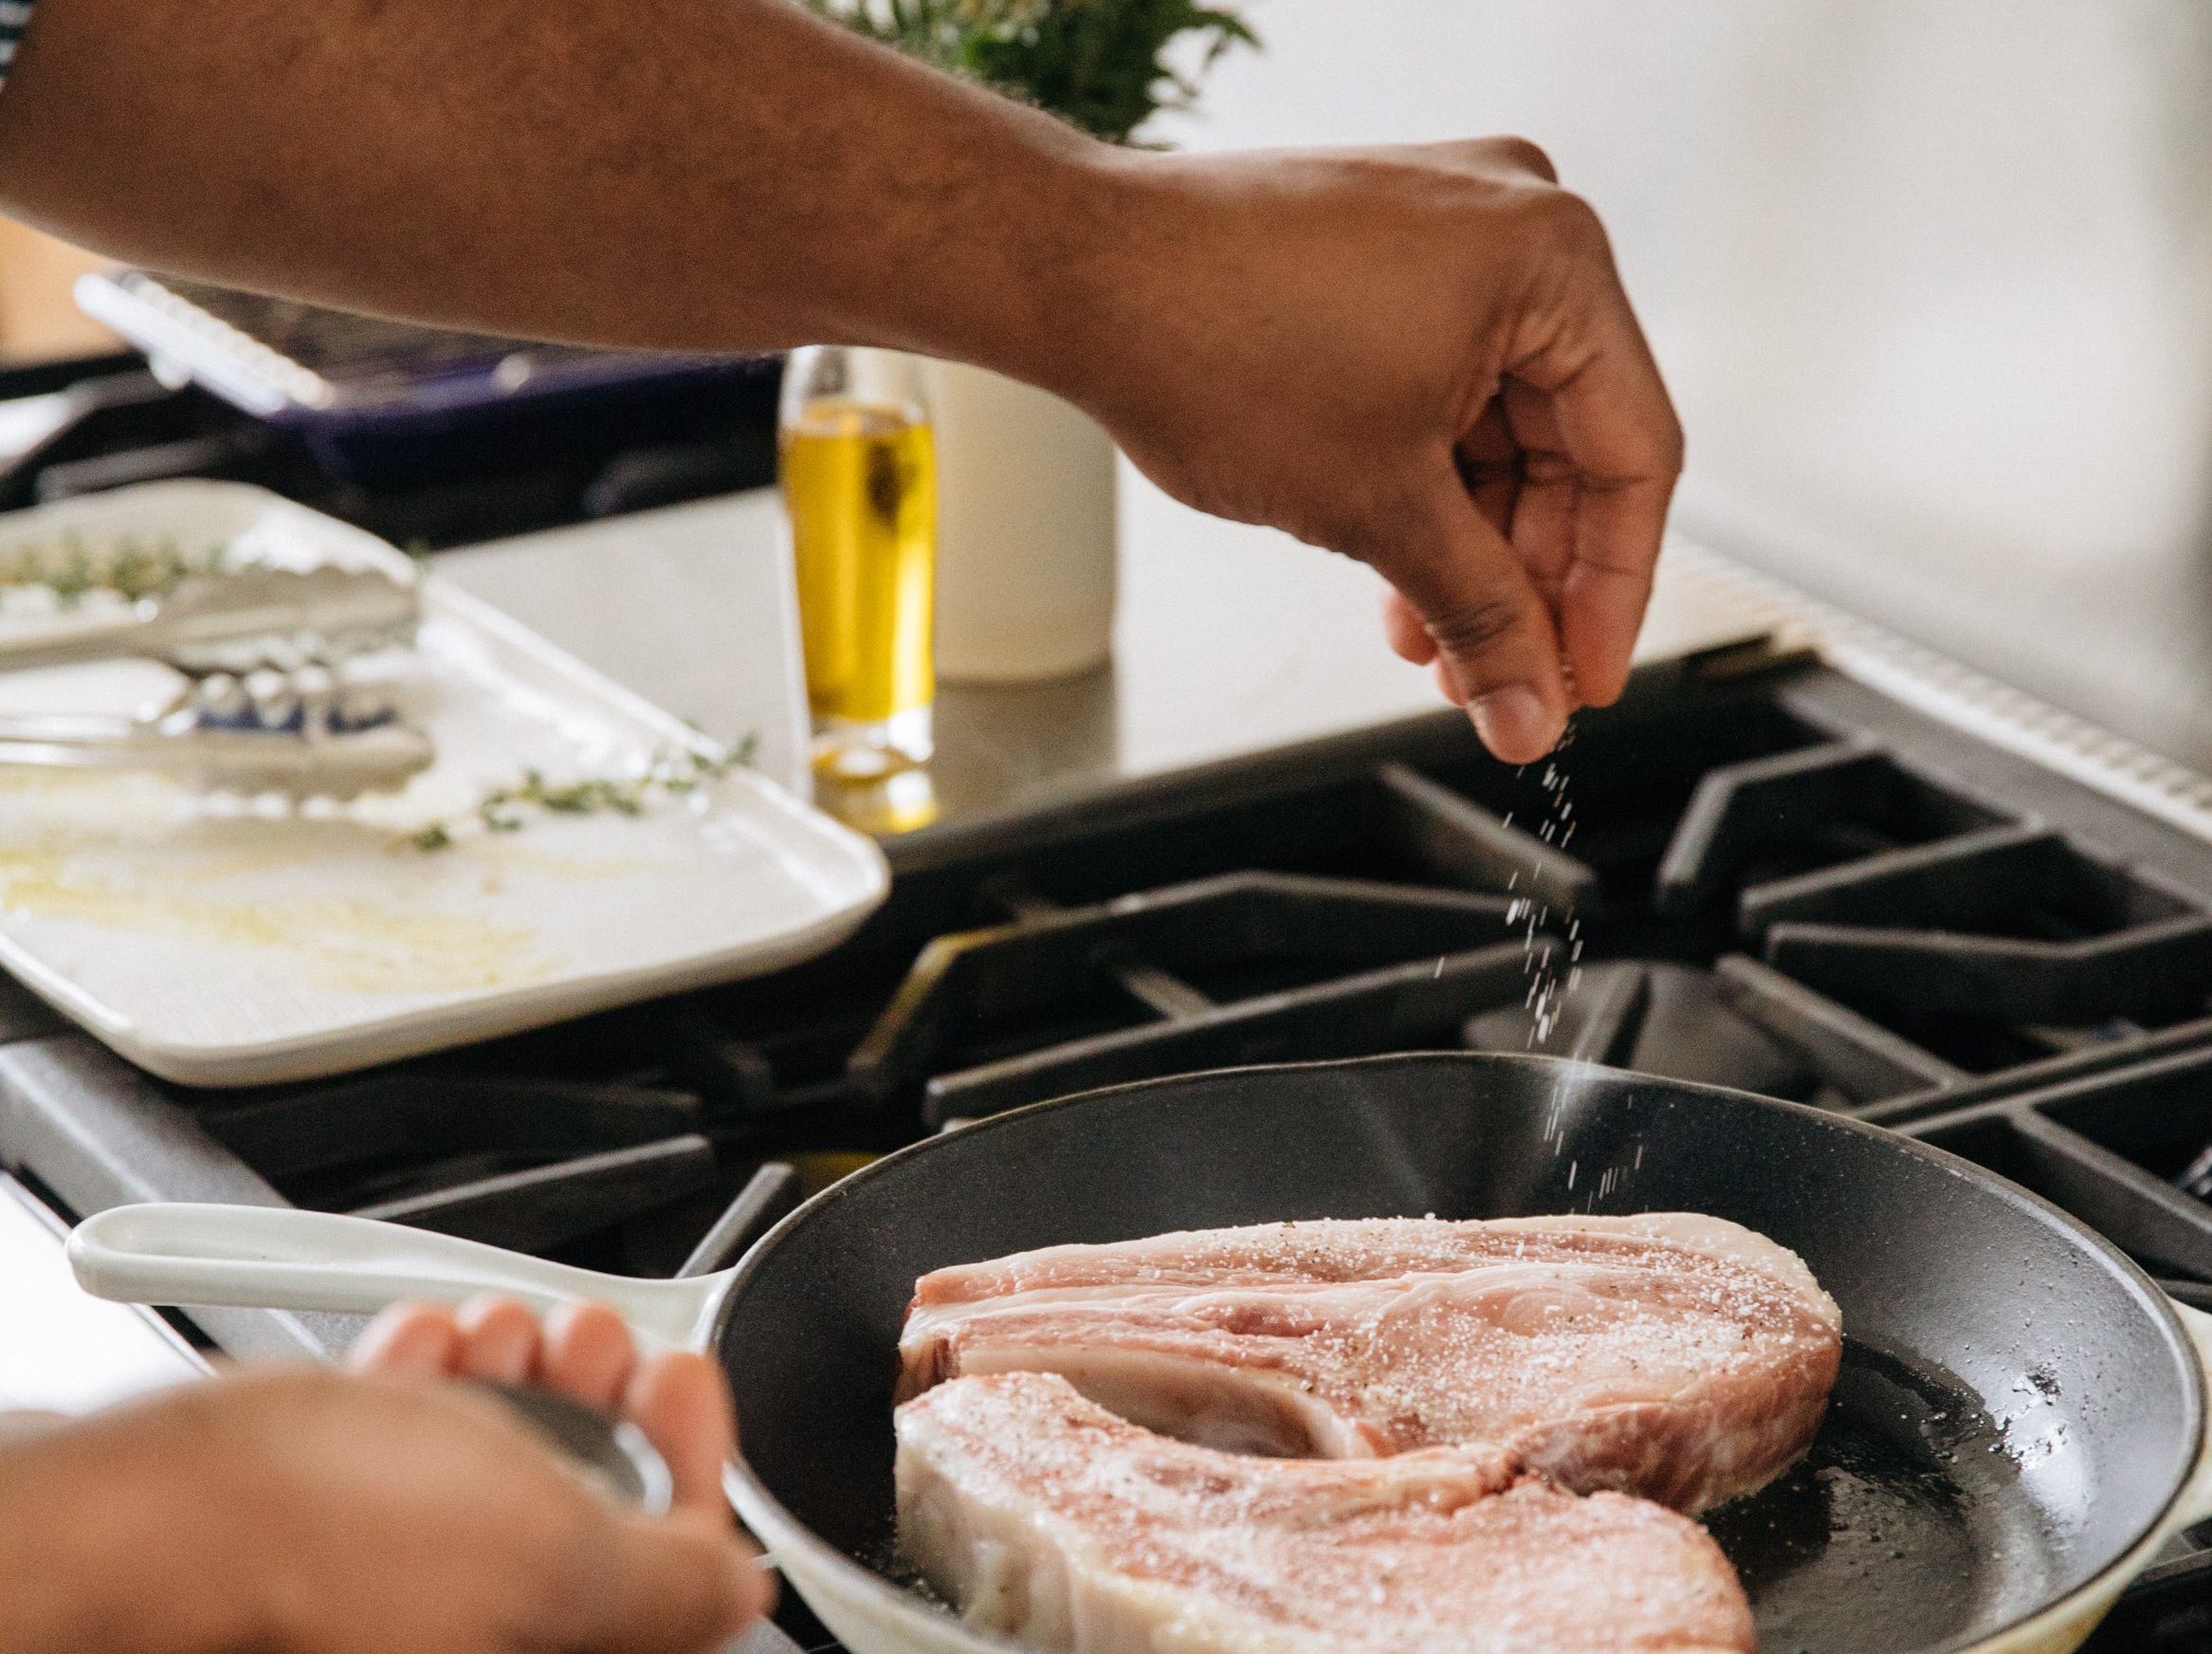 Adding salt to pork chops on a frying pan